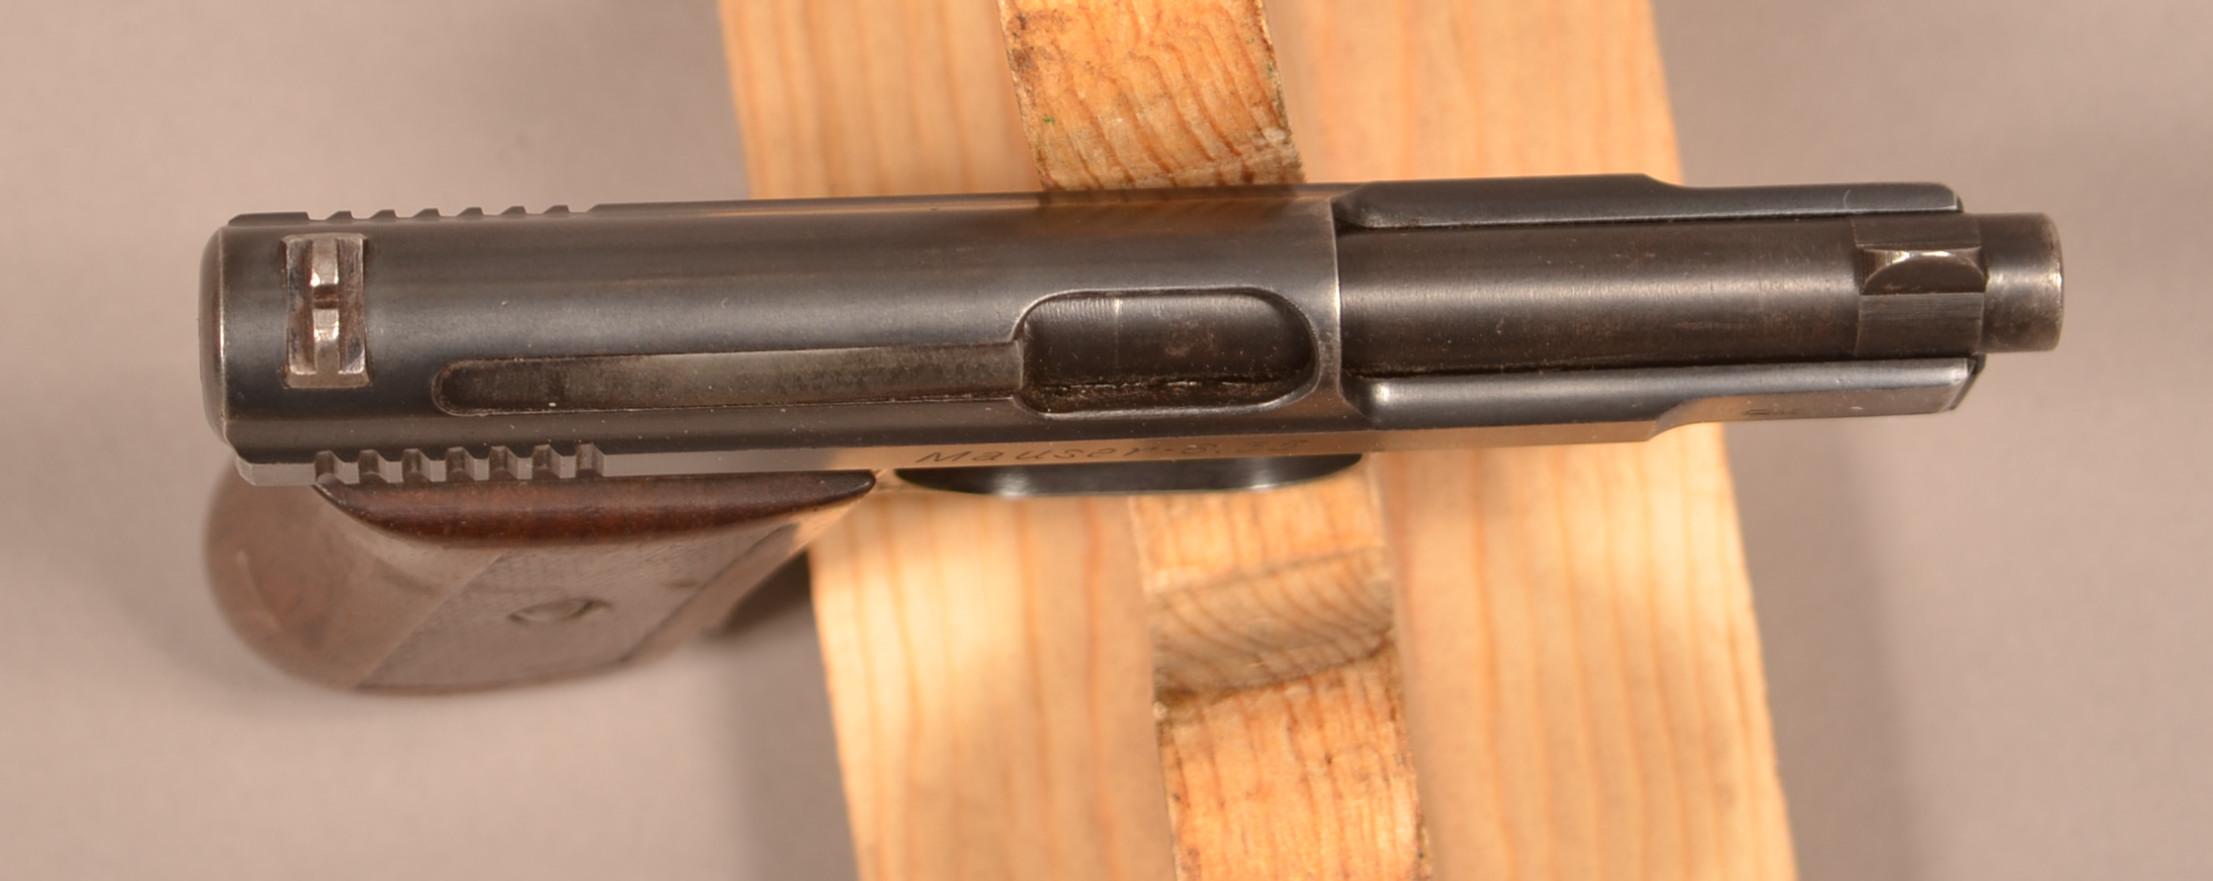 Mauser mod. 1934 6.35mm pocket pistol